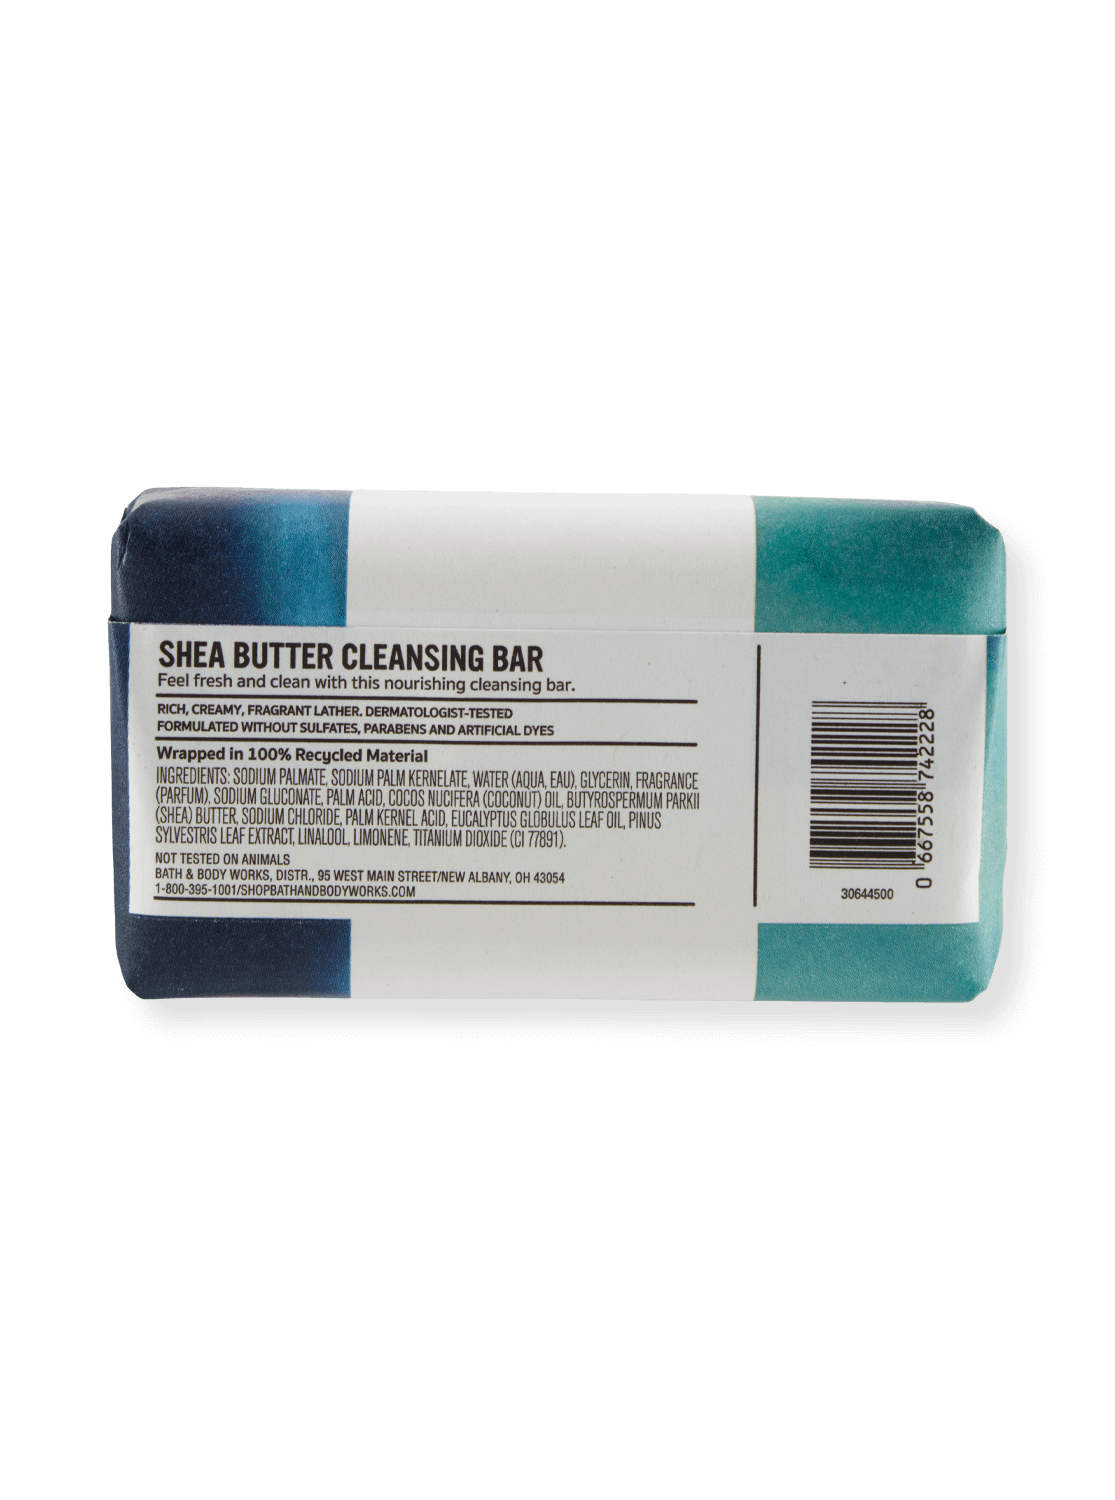 Block soap - AROMA - Northern Brights - 141.75g 